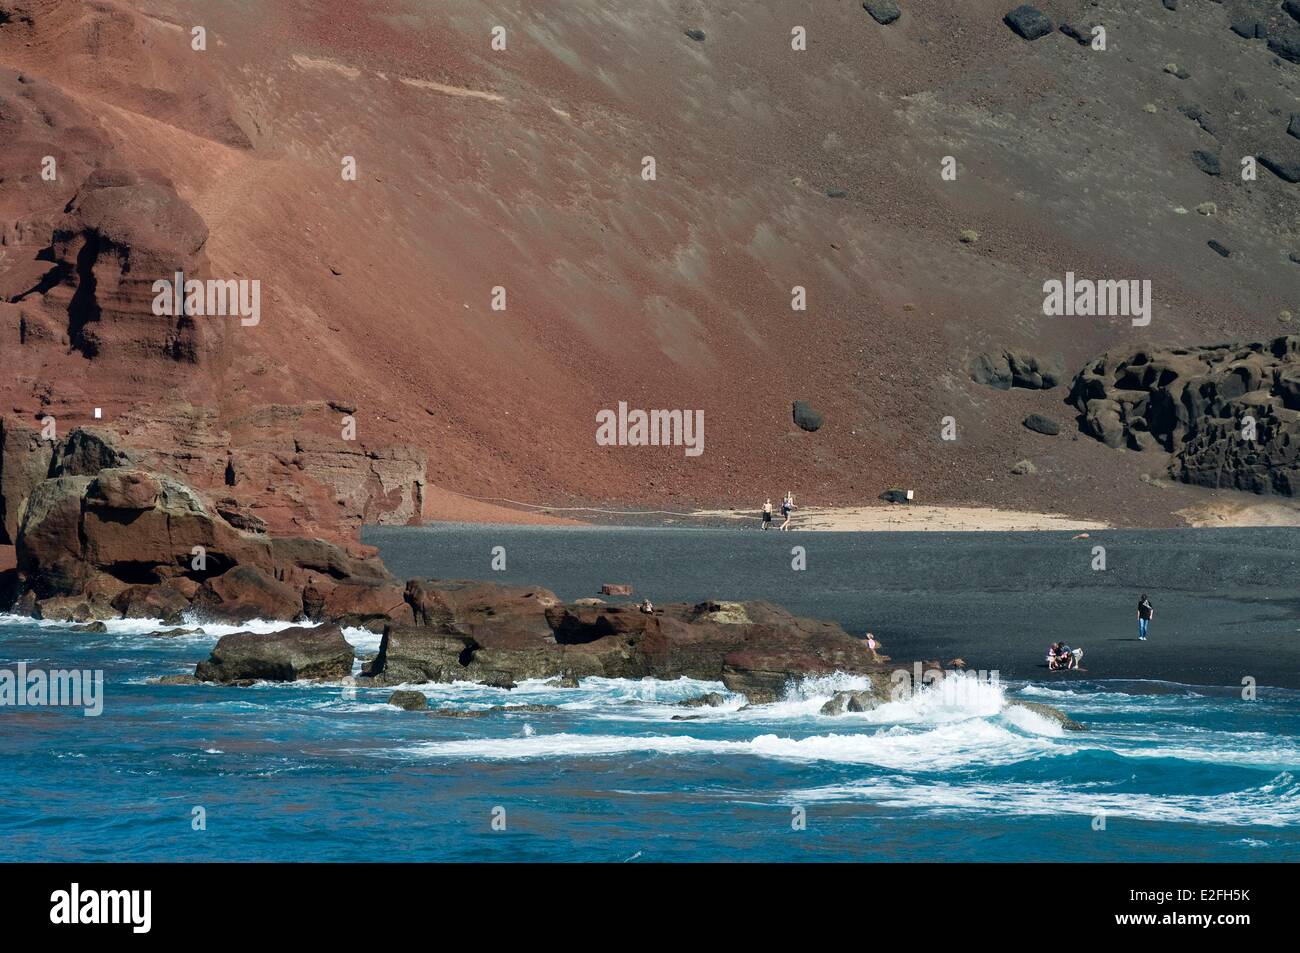 Spain, Canary Islands, Lanzarote Island, El Golfo, black sand beach Stock Photo